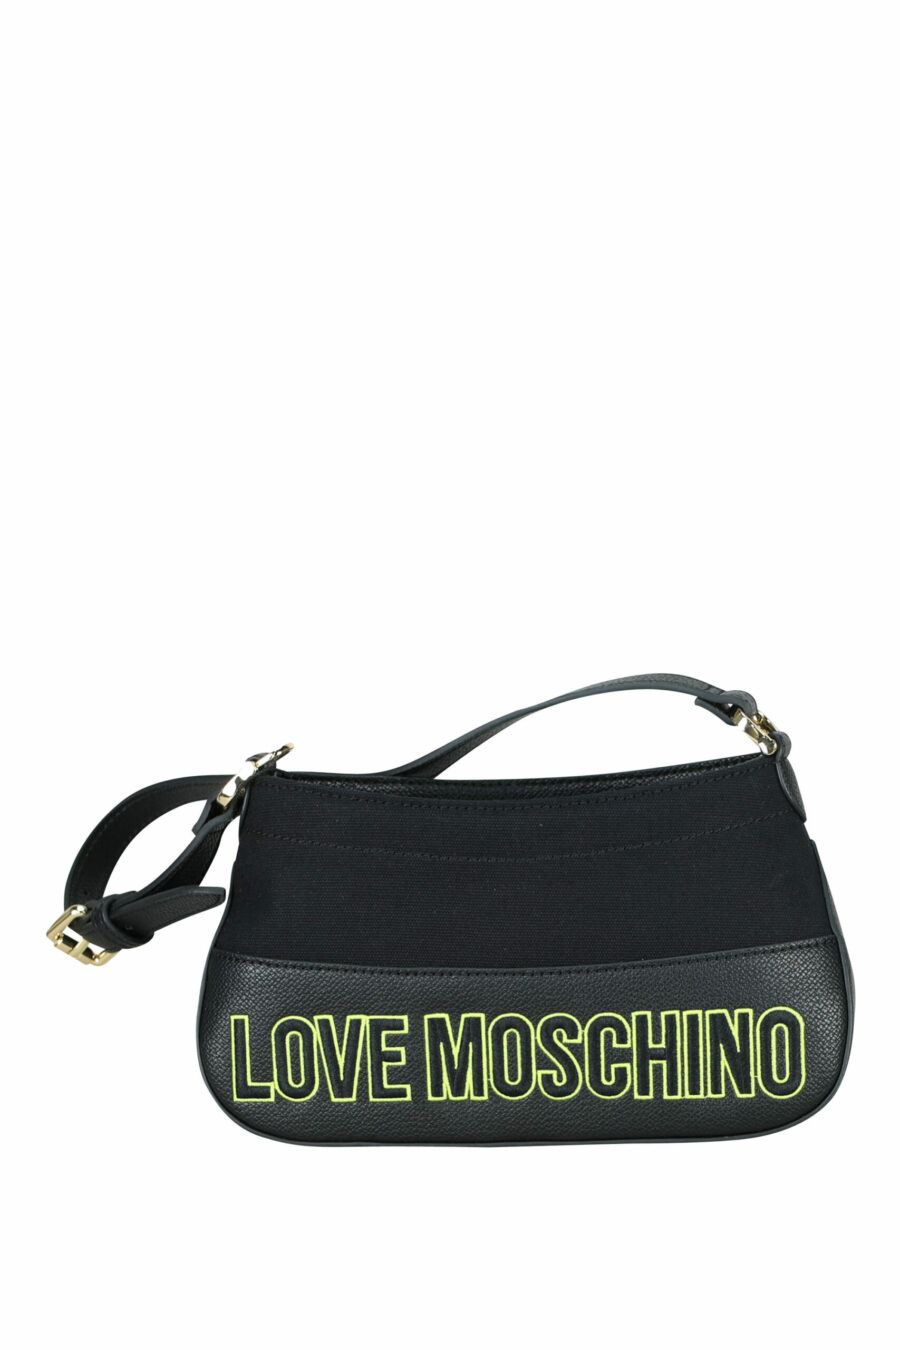 Shoulder bag with lime green maxilogo - 8054388070782 scaled